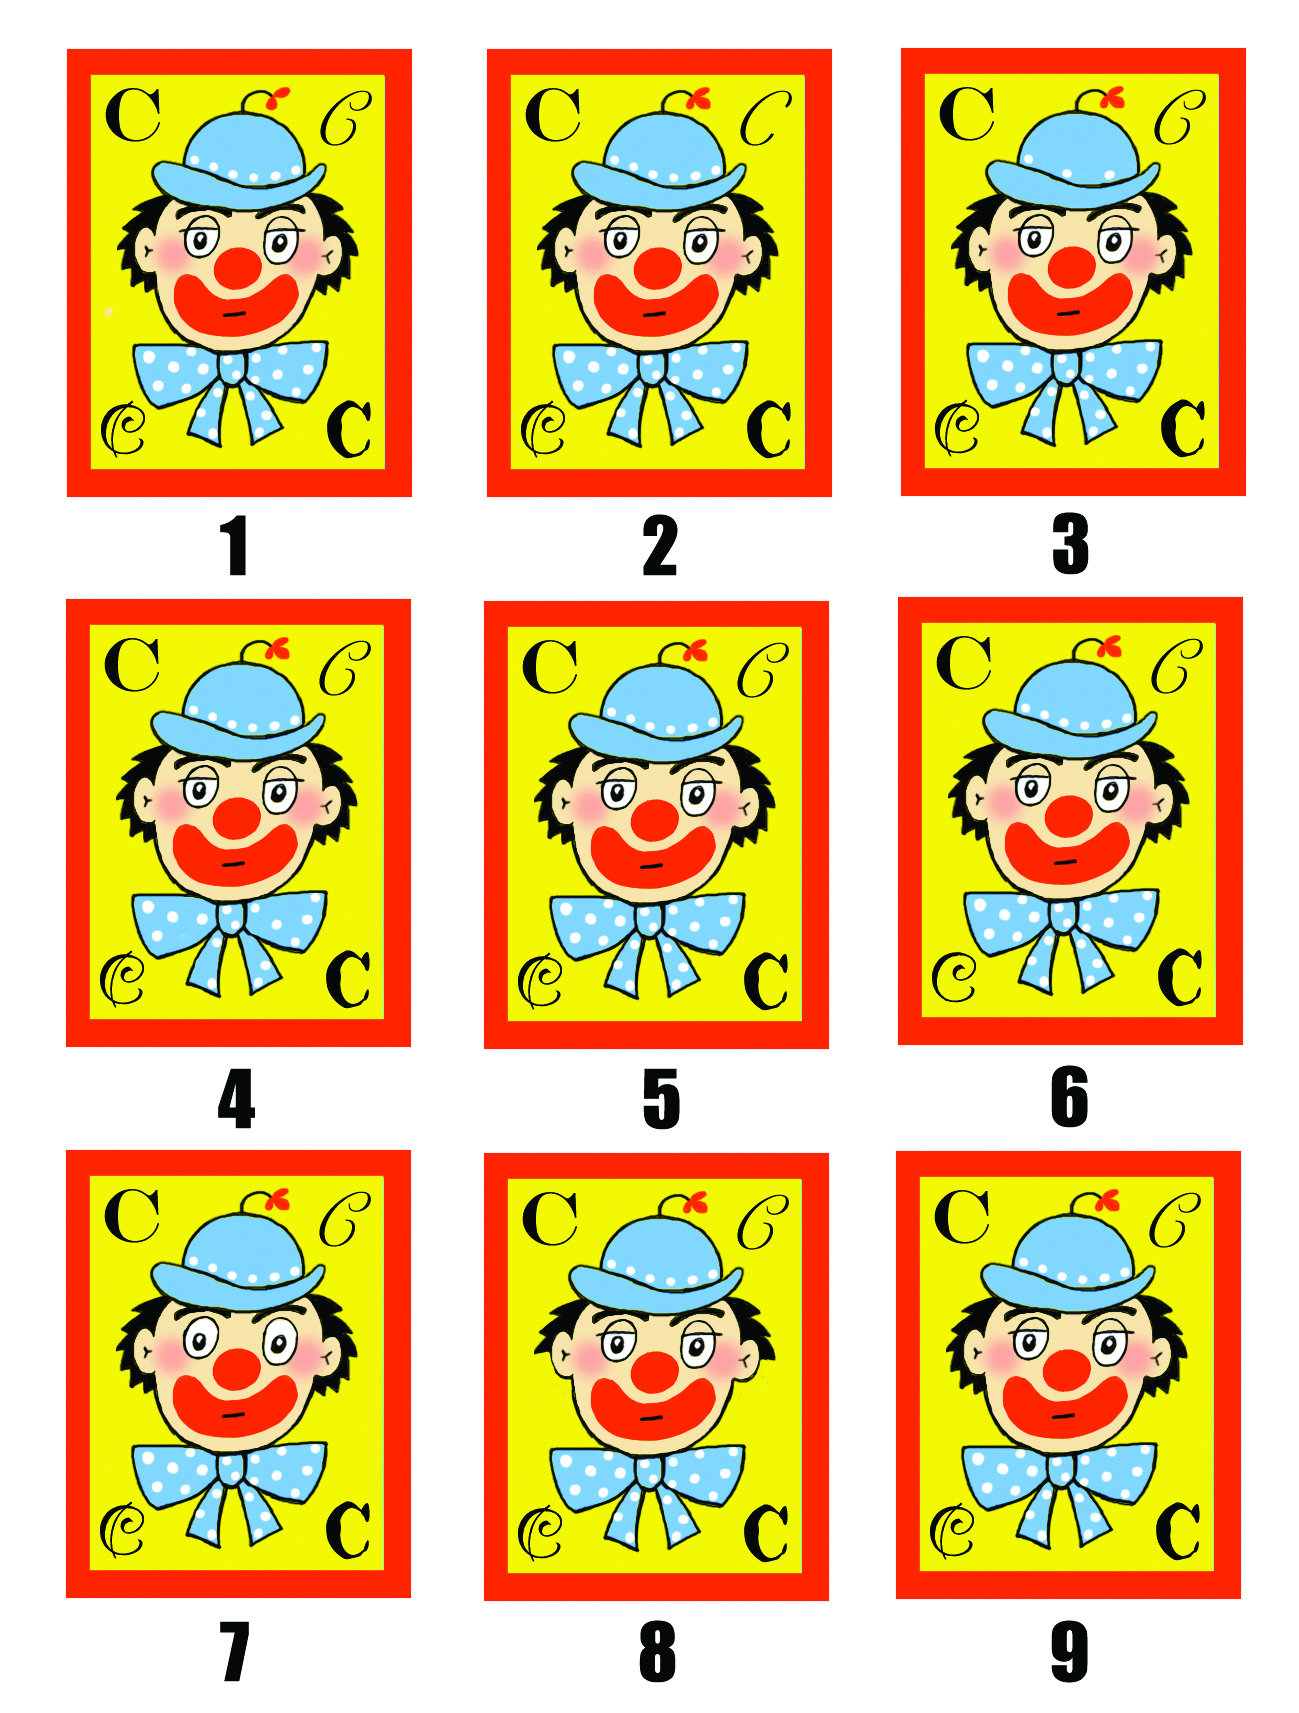 02_Koppelen - clown - 5=9.jpg